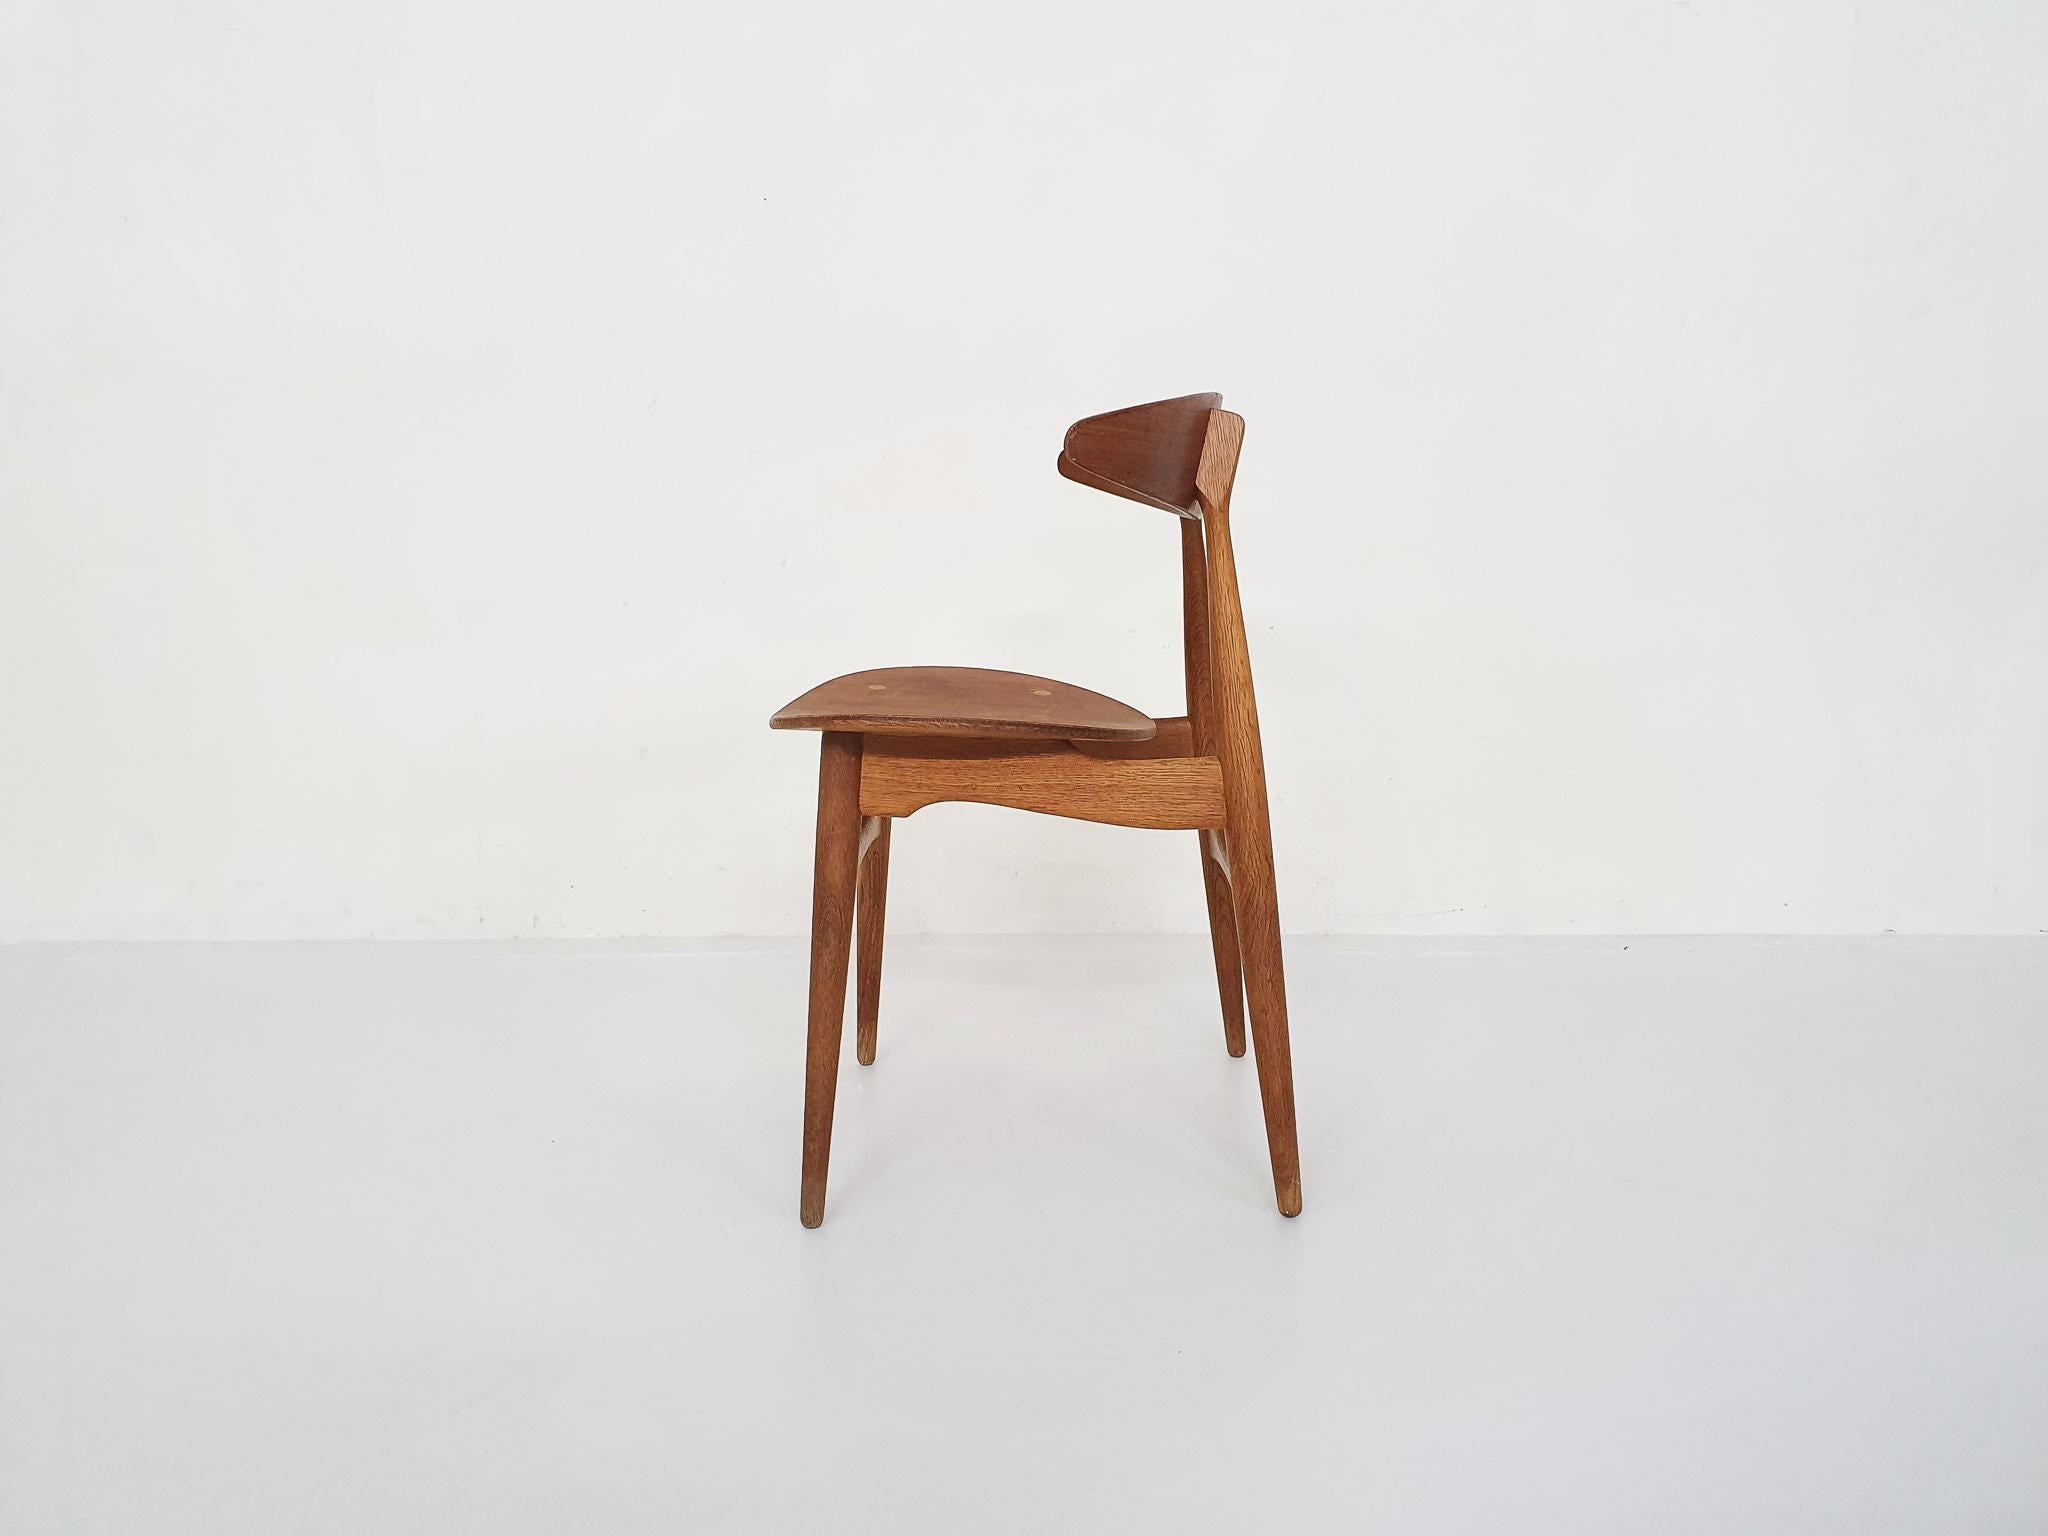 20th Century Teak Dining Chair CH33T by Hans Wegner for Carl Hansen and Son, Denmark 1950's